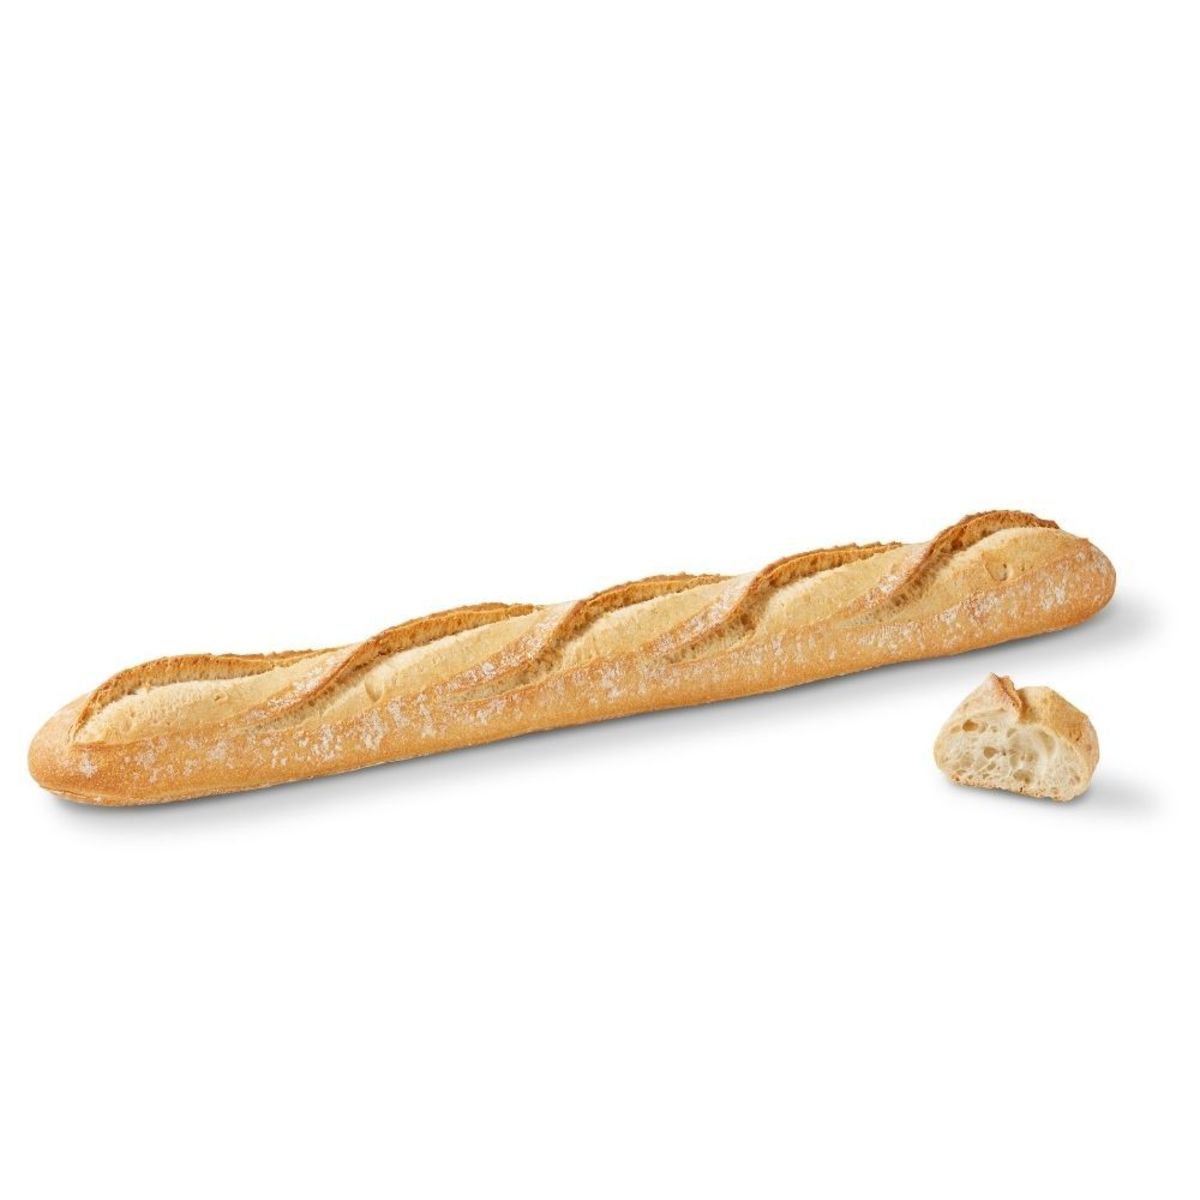 Plain Baguette 280g | Bread | Family | Catalog | Bridor Site